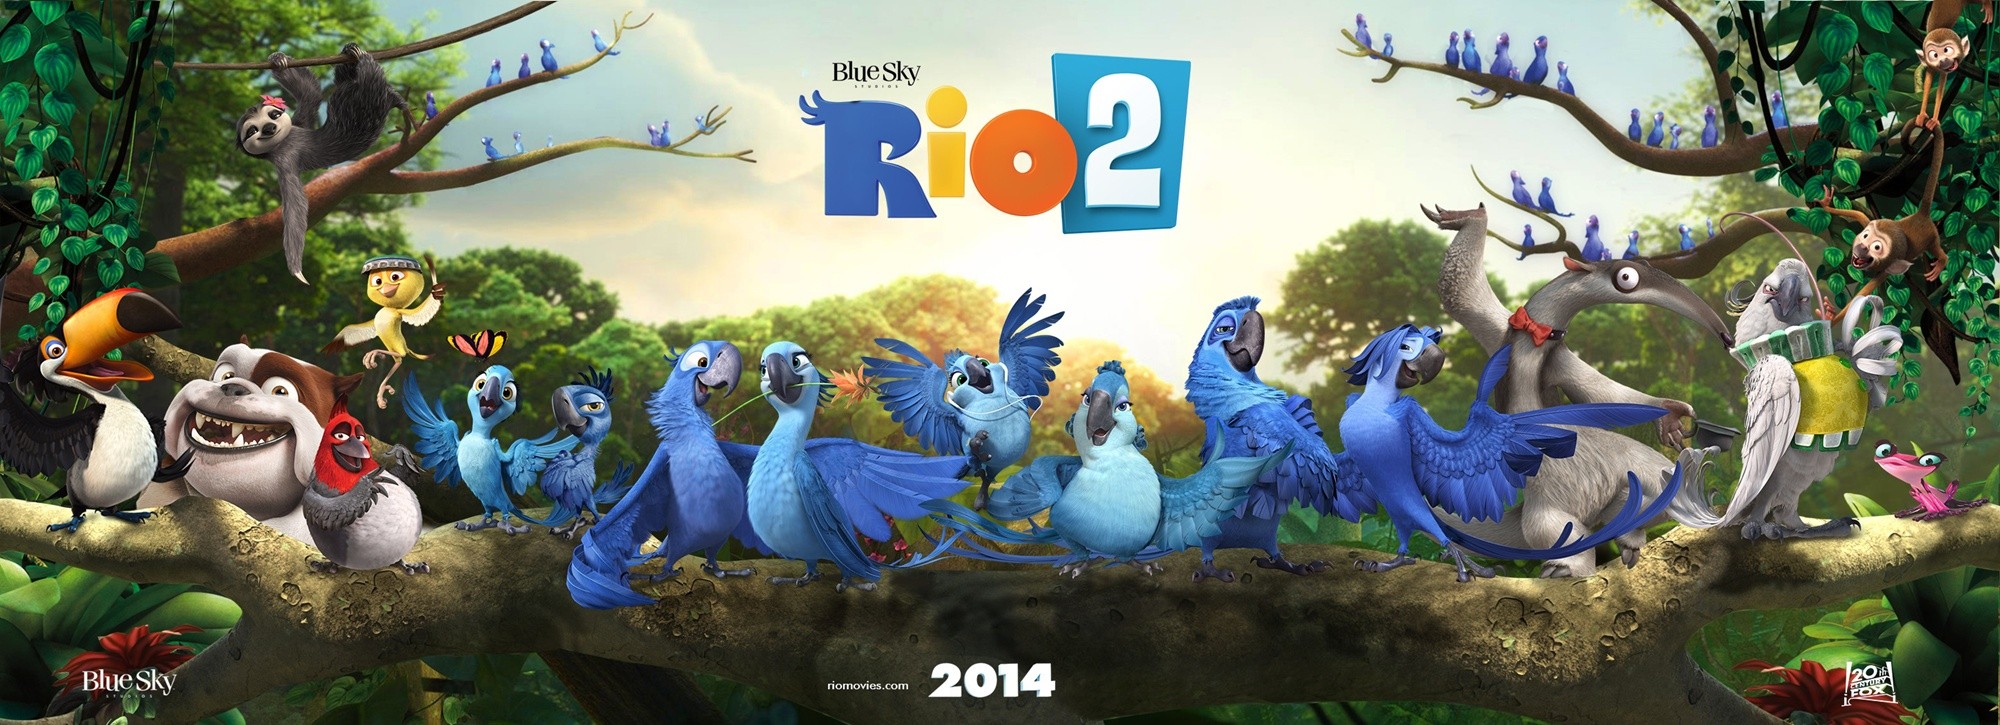 Rio 2 HD wallpapers, Desktop wallpaper - most viewed